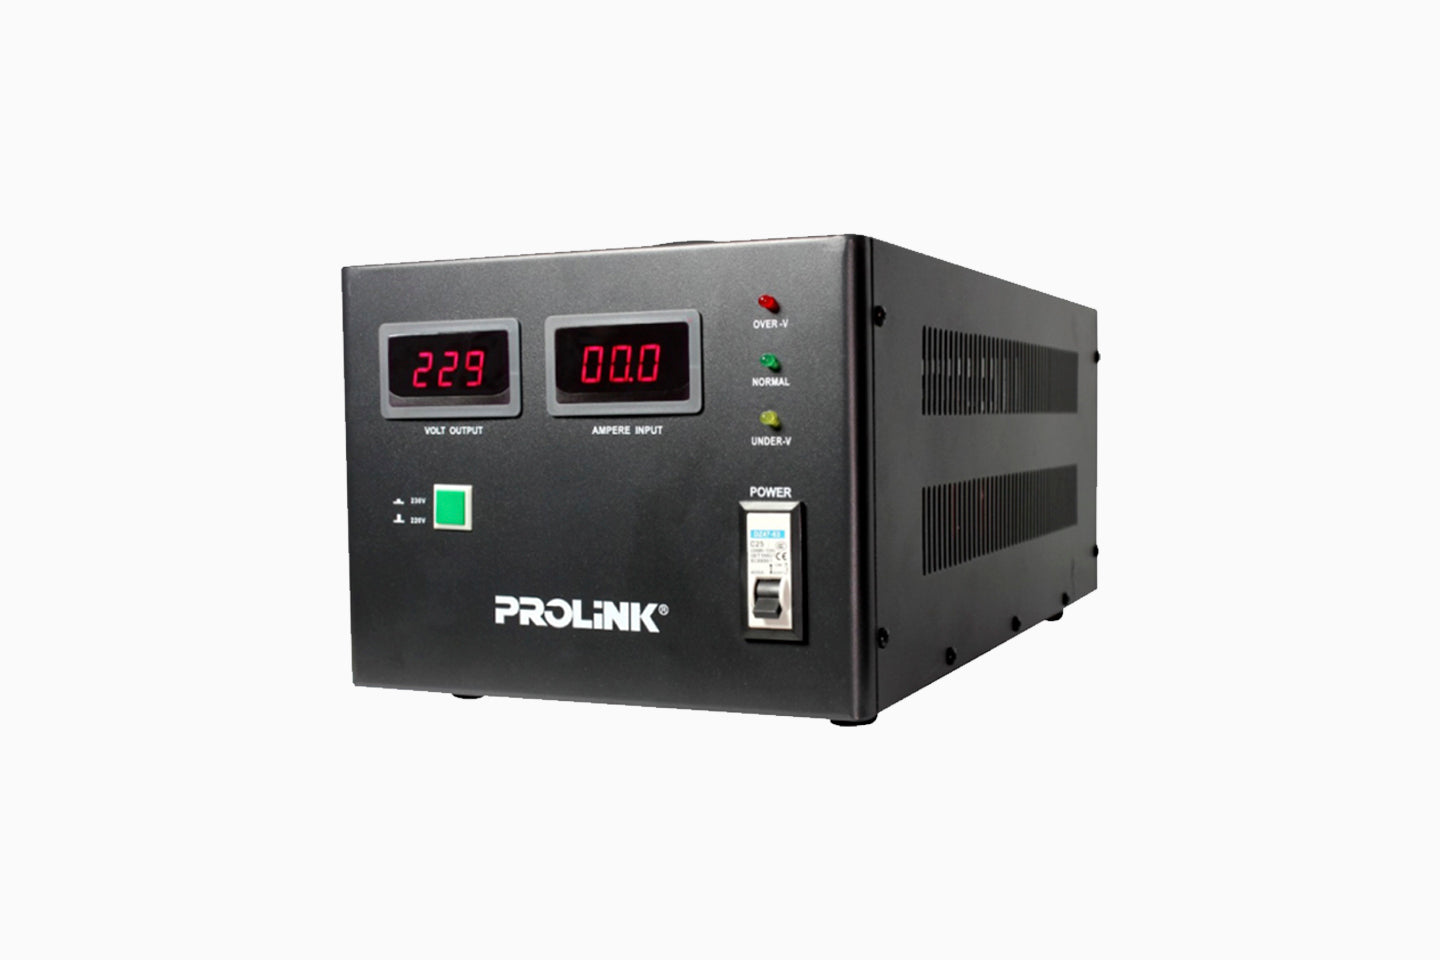 Prolink PVS2001CD 2KVA Servo Motor Controlled  AVR with Digital Display